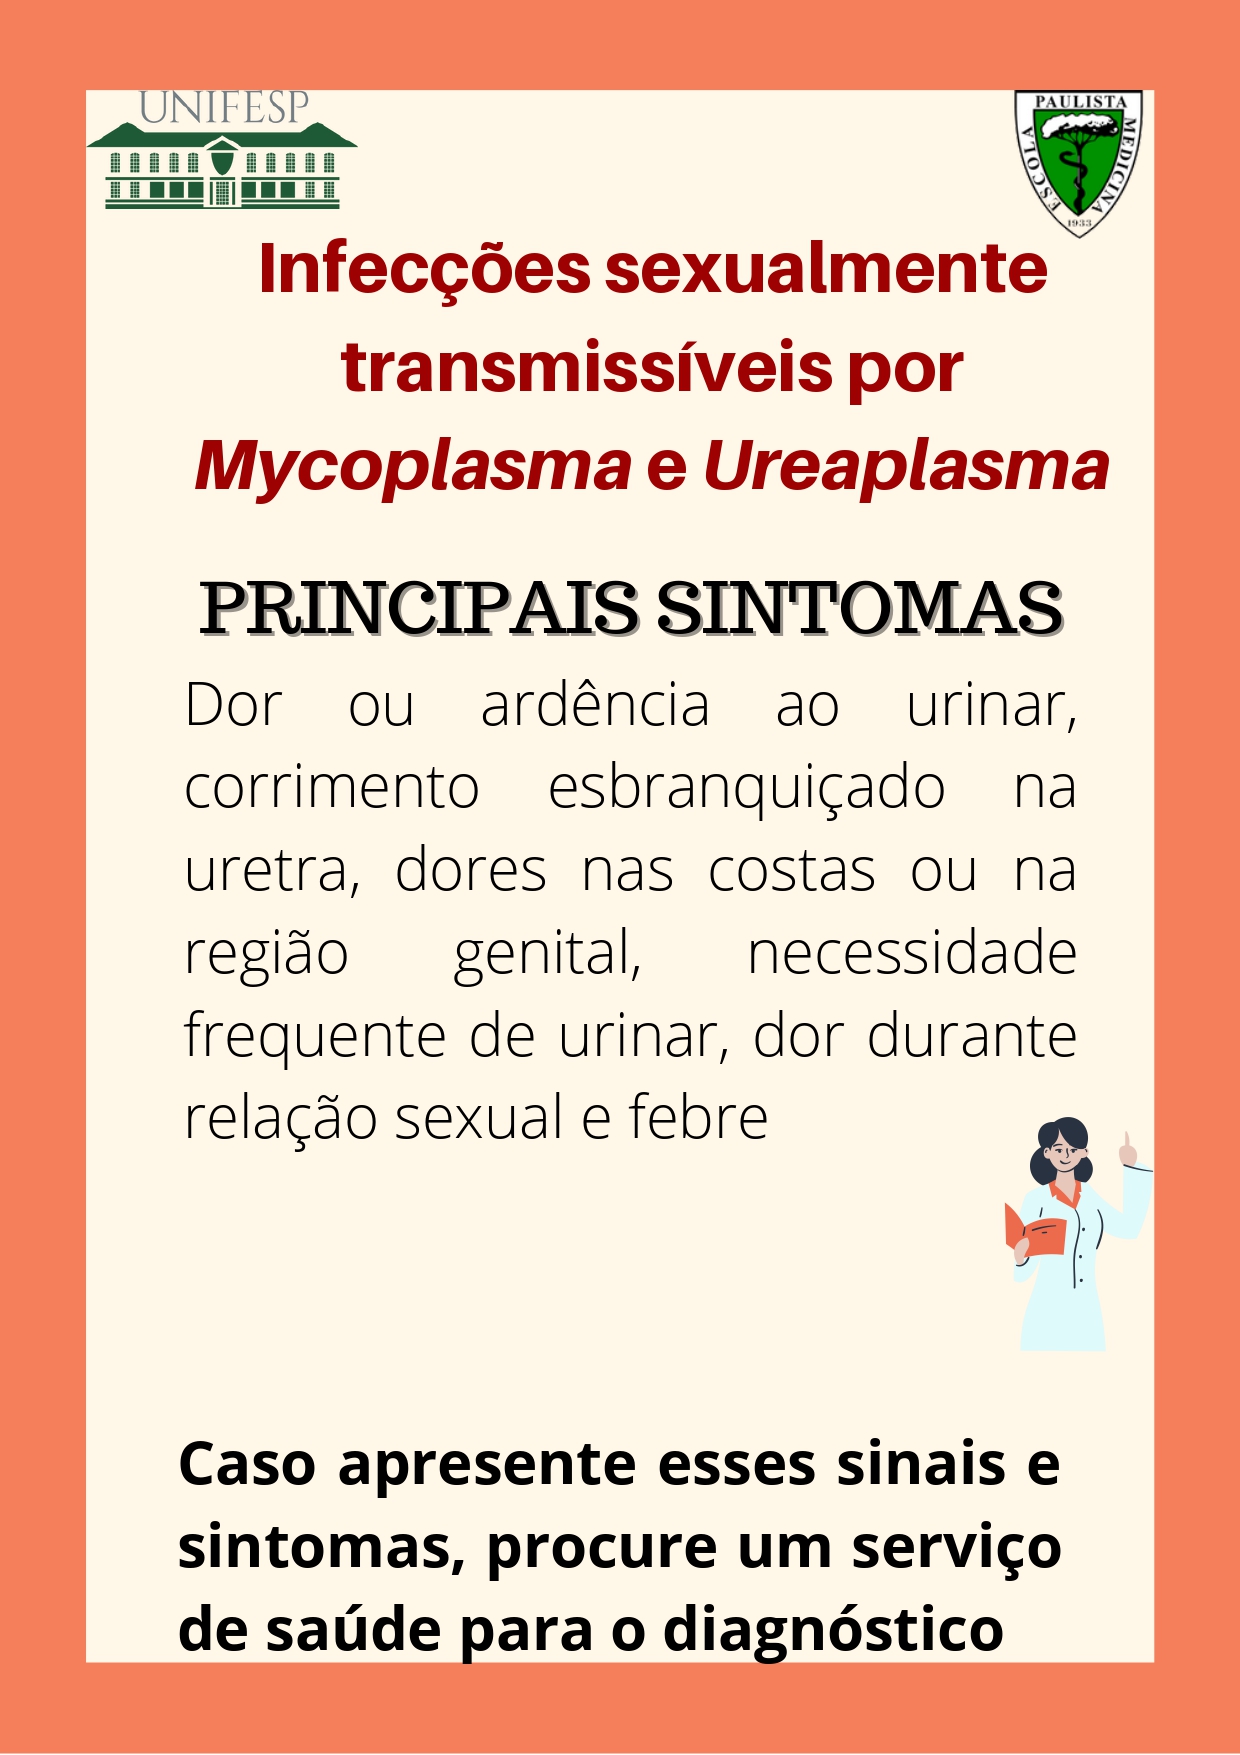 Mycoplasma e Ureaplasma page 0002